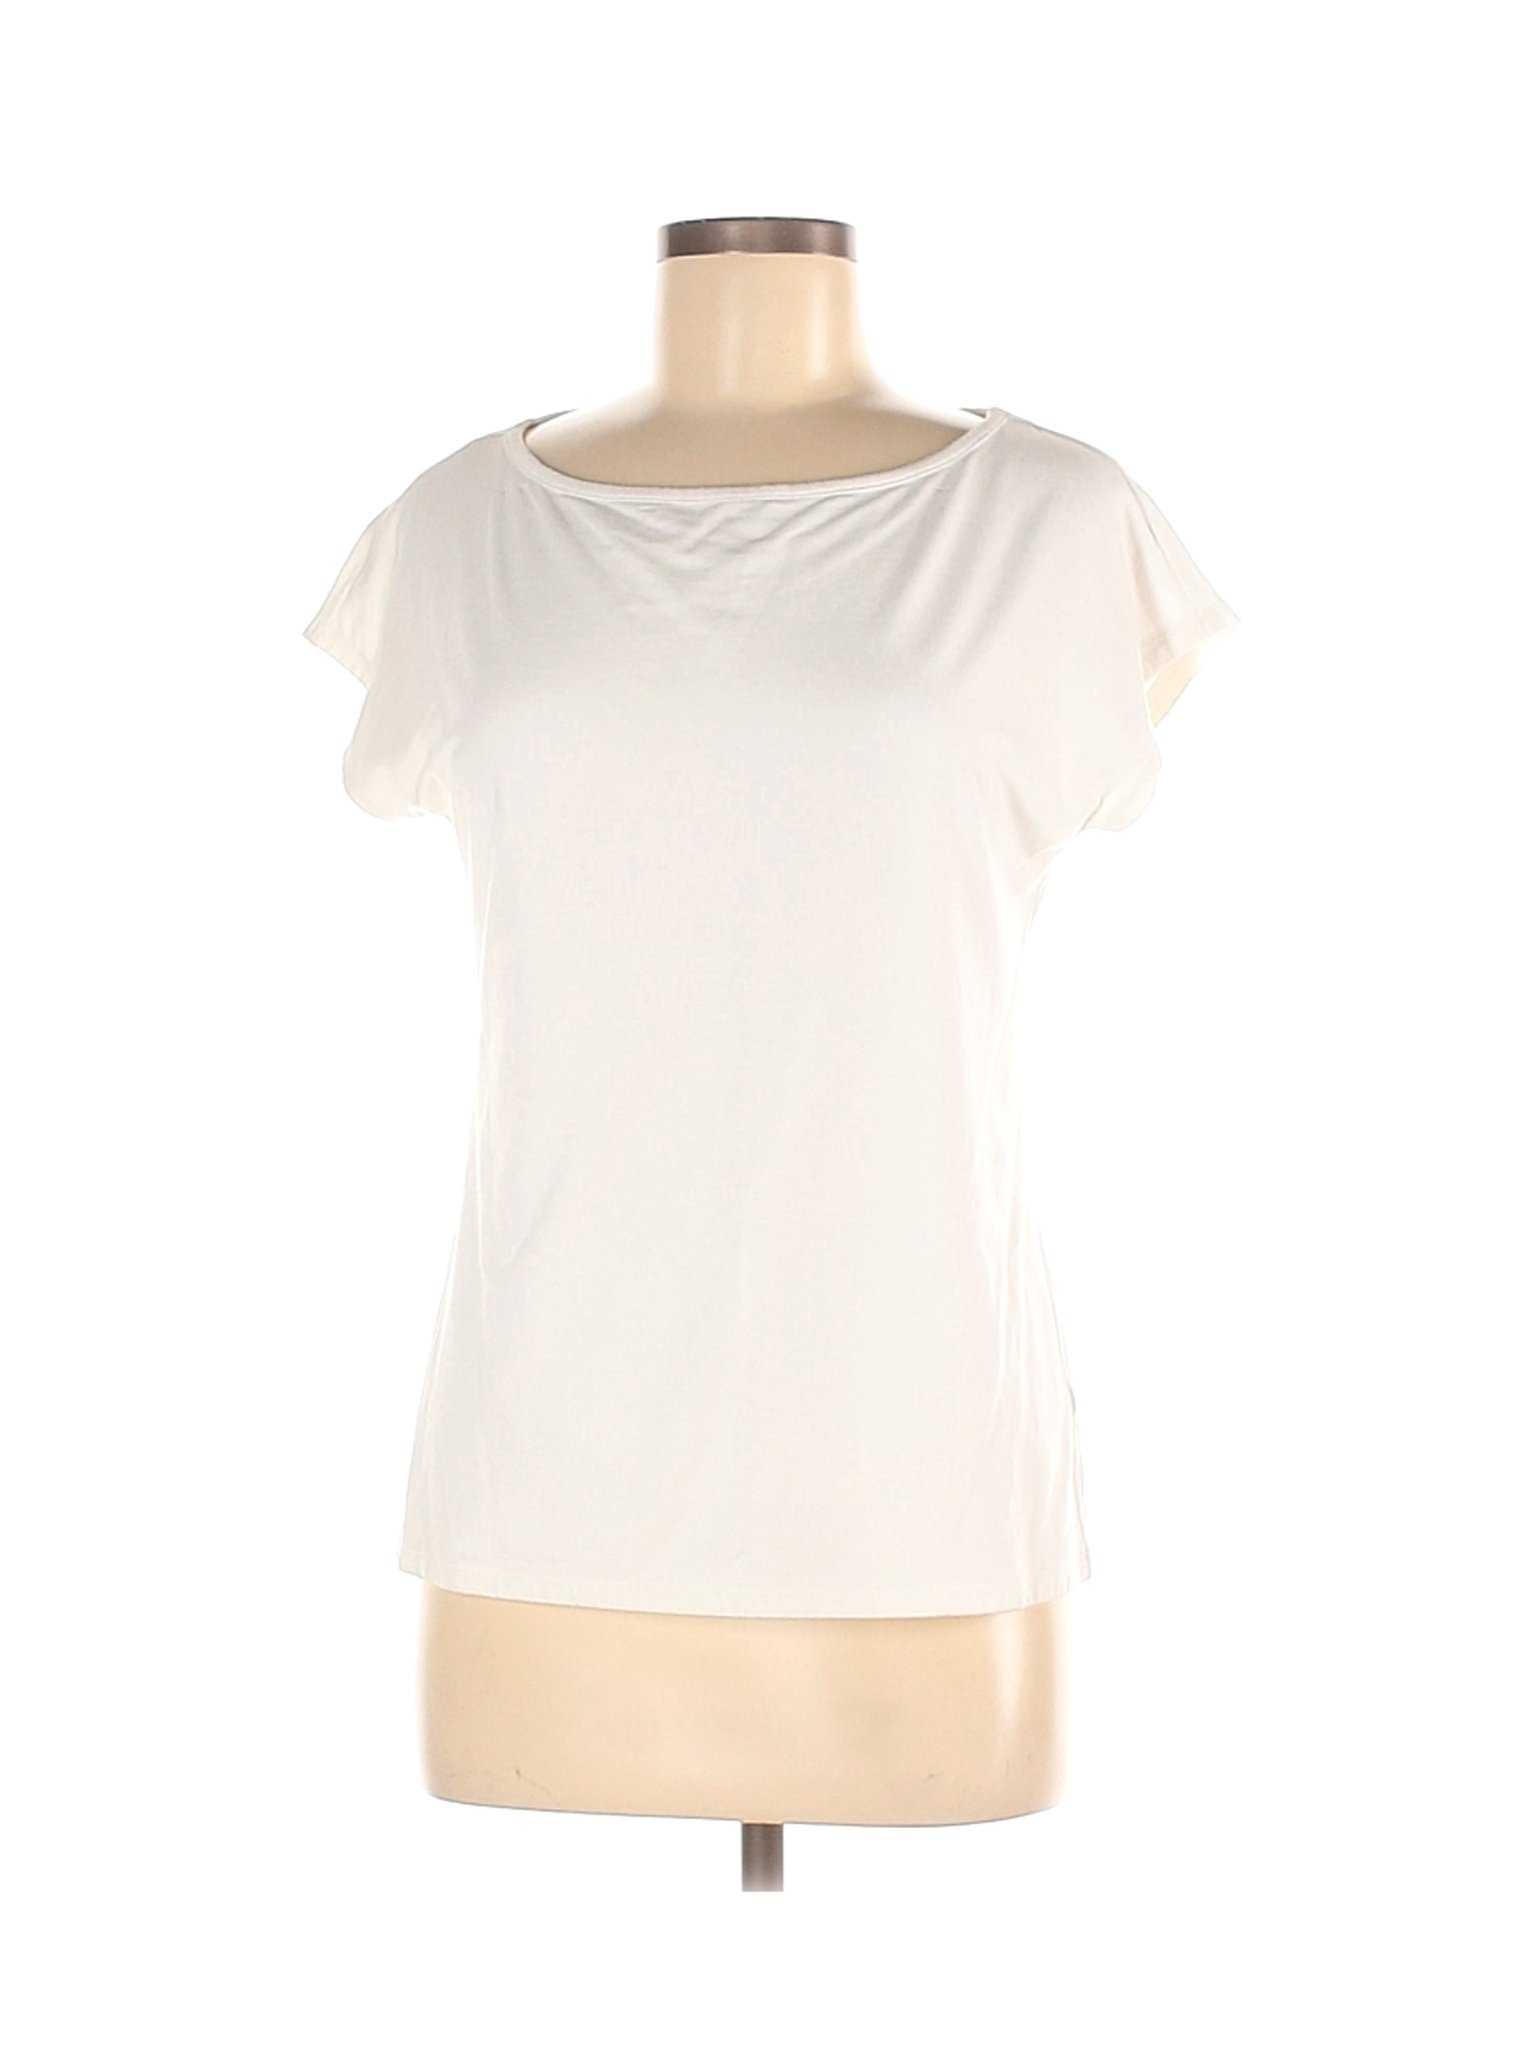 Talbots Women White Short Sleeve Top M | eBay